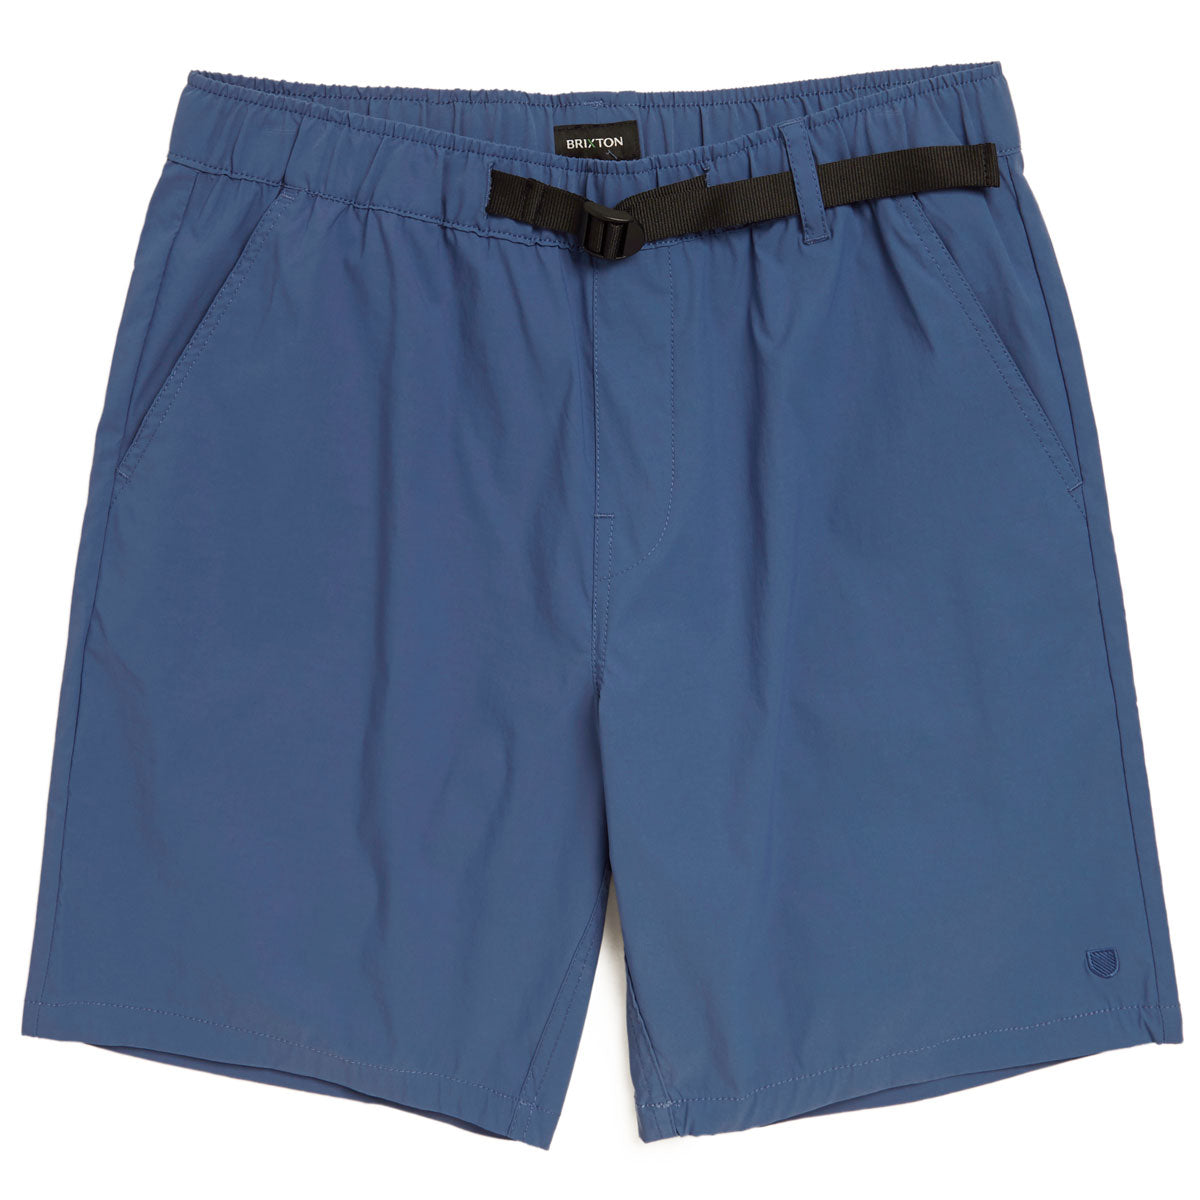 Brixton Steady Cinch X Shorts - Pacific Blue